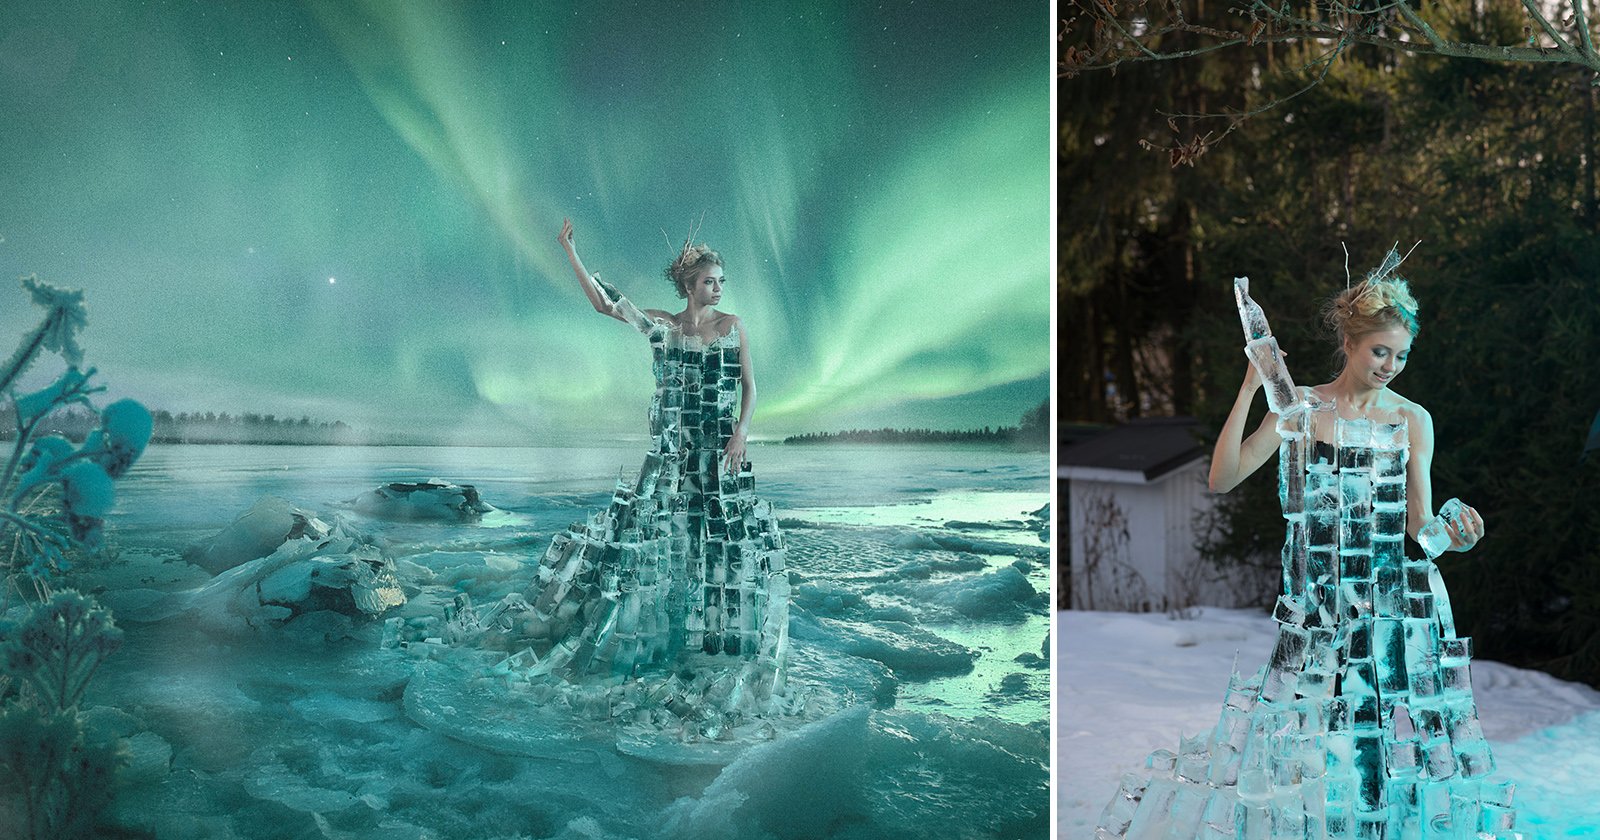  photographer built ice dress her maiden 